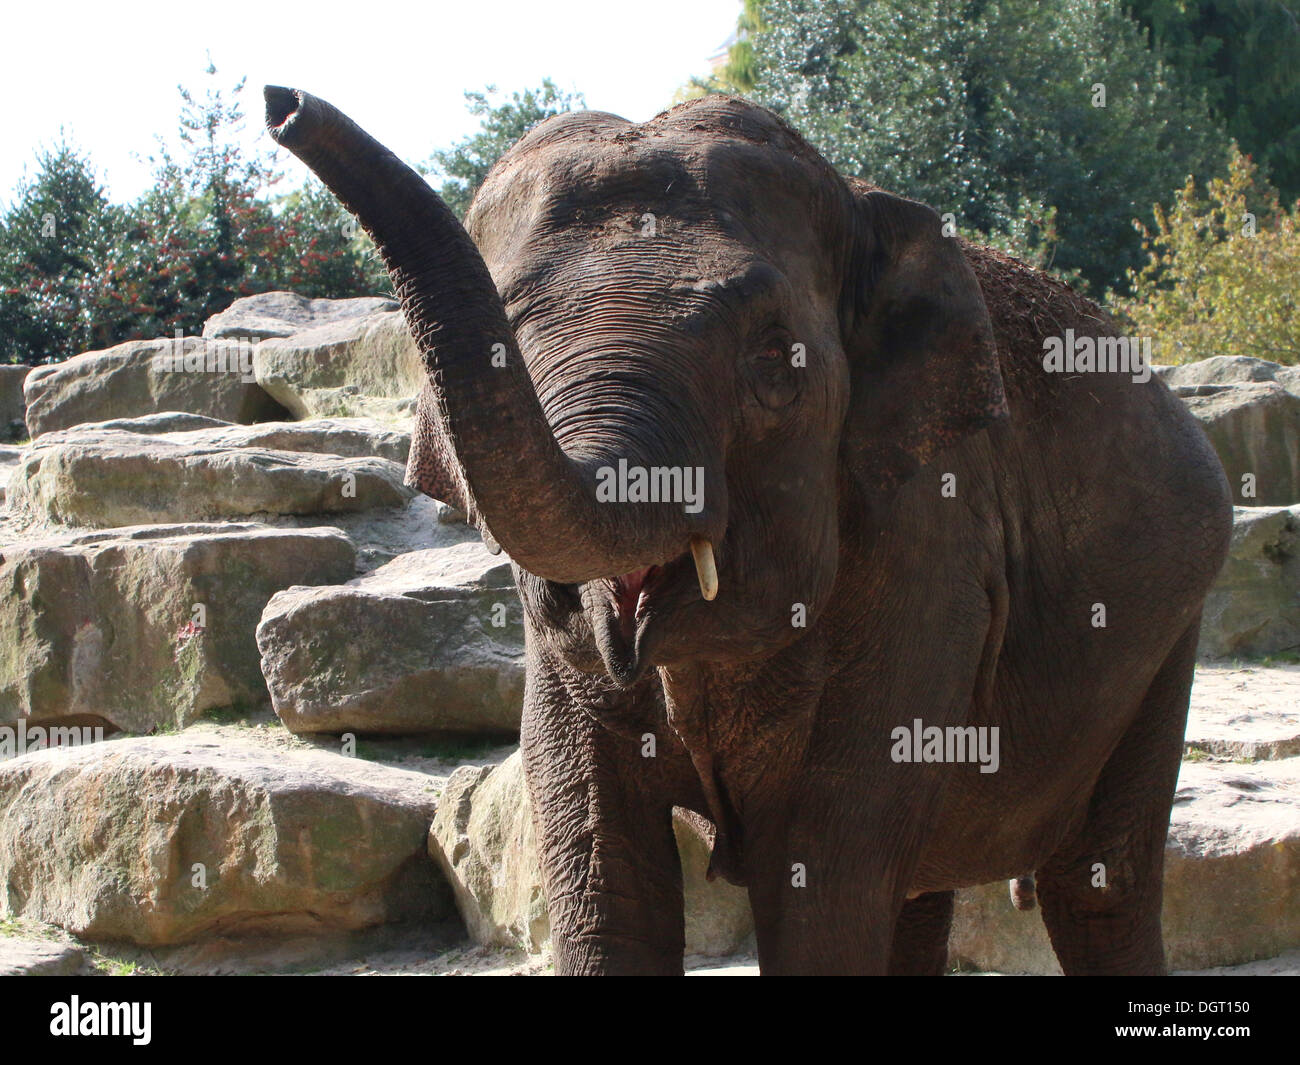 Asian elephant (Elephas maximus) trumpeting, trunk lifted upwards Stock Photo